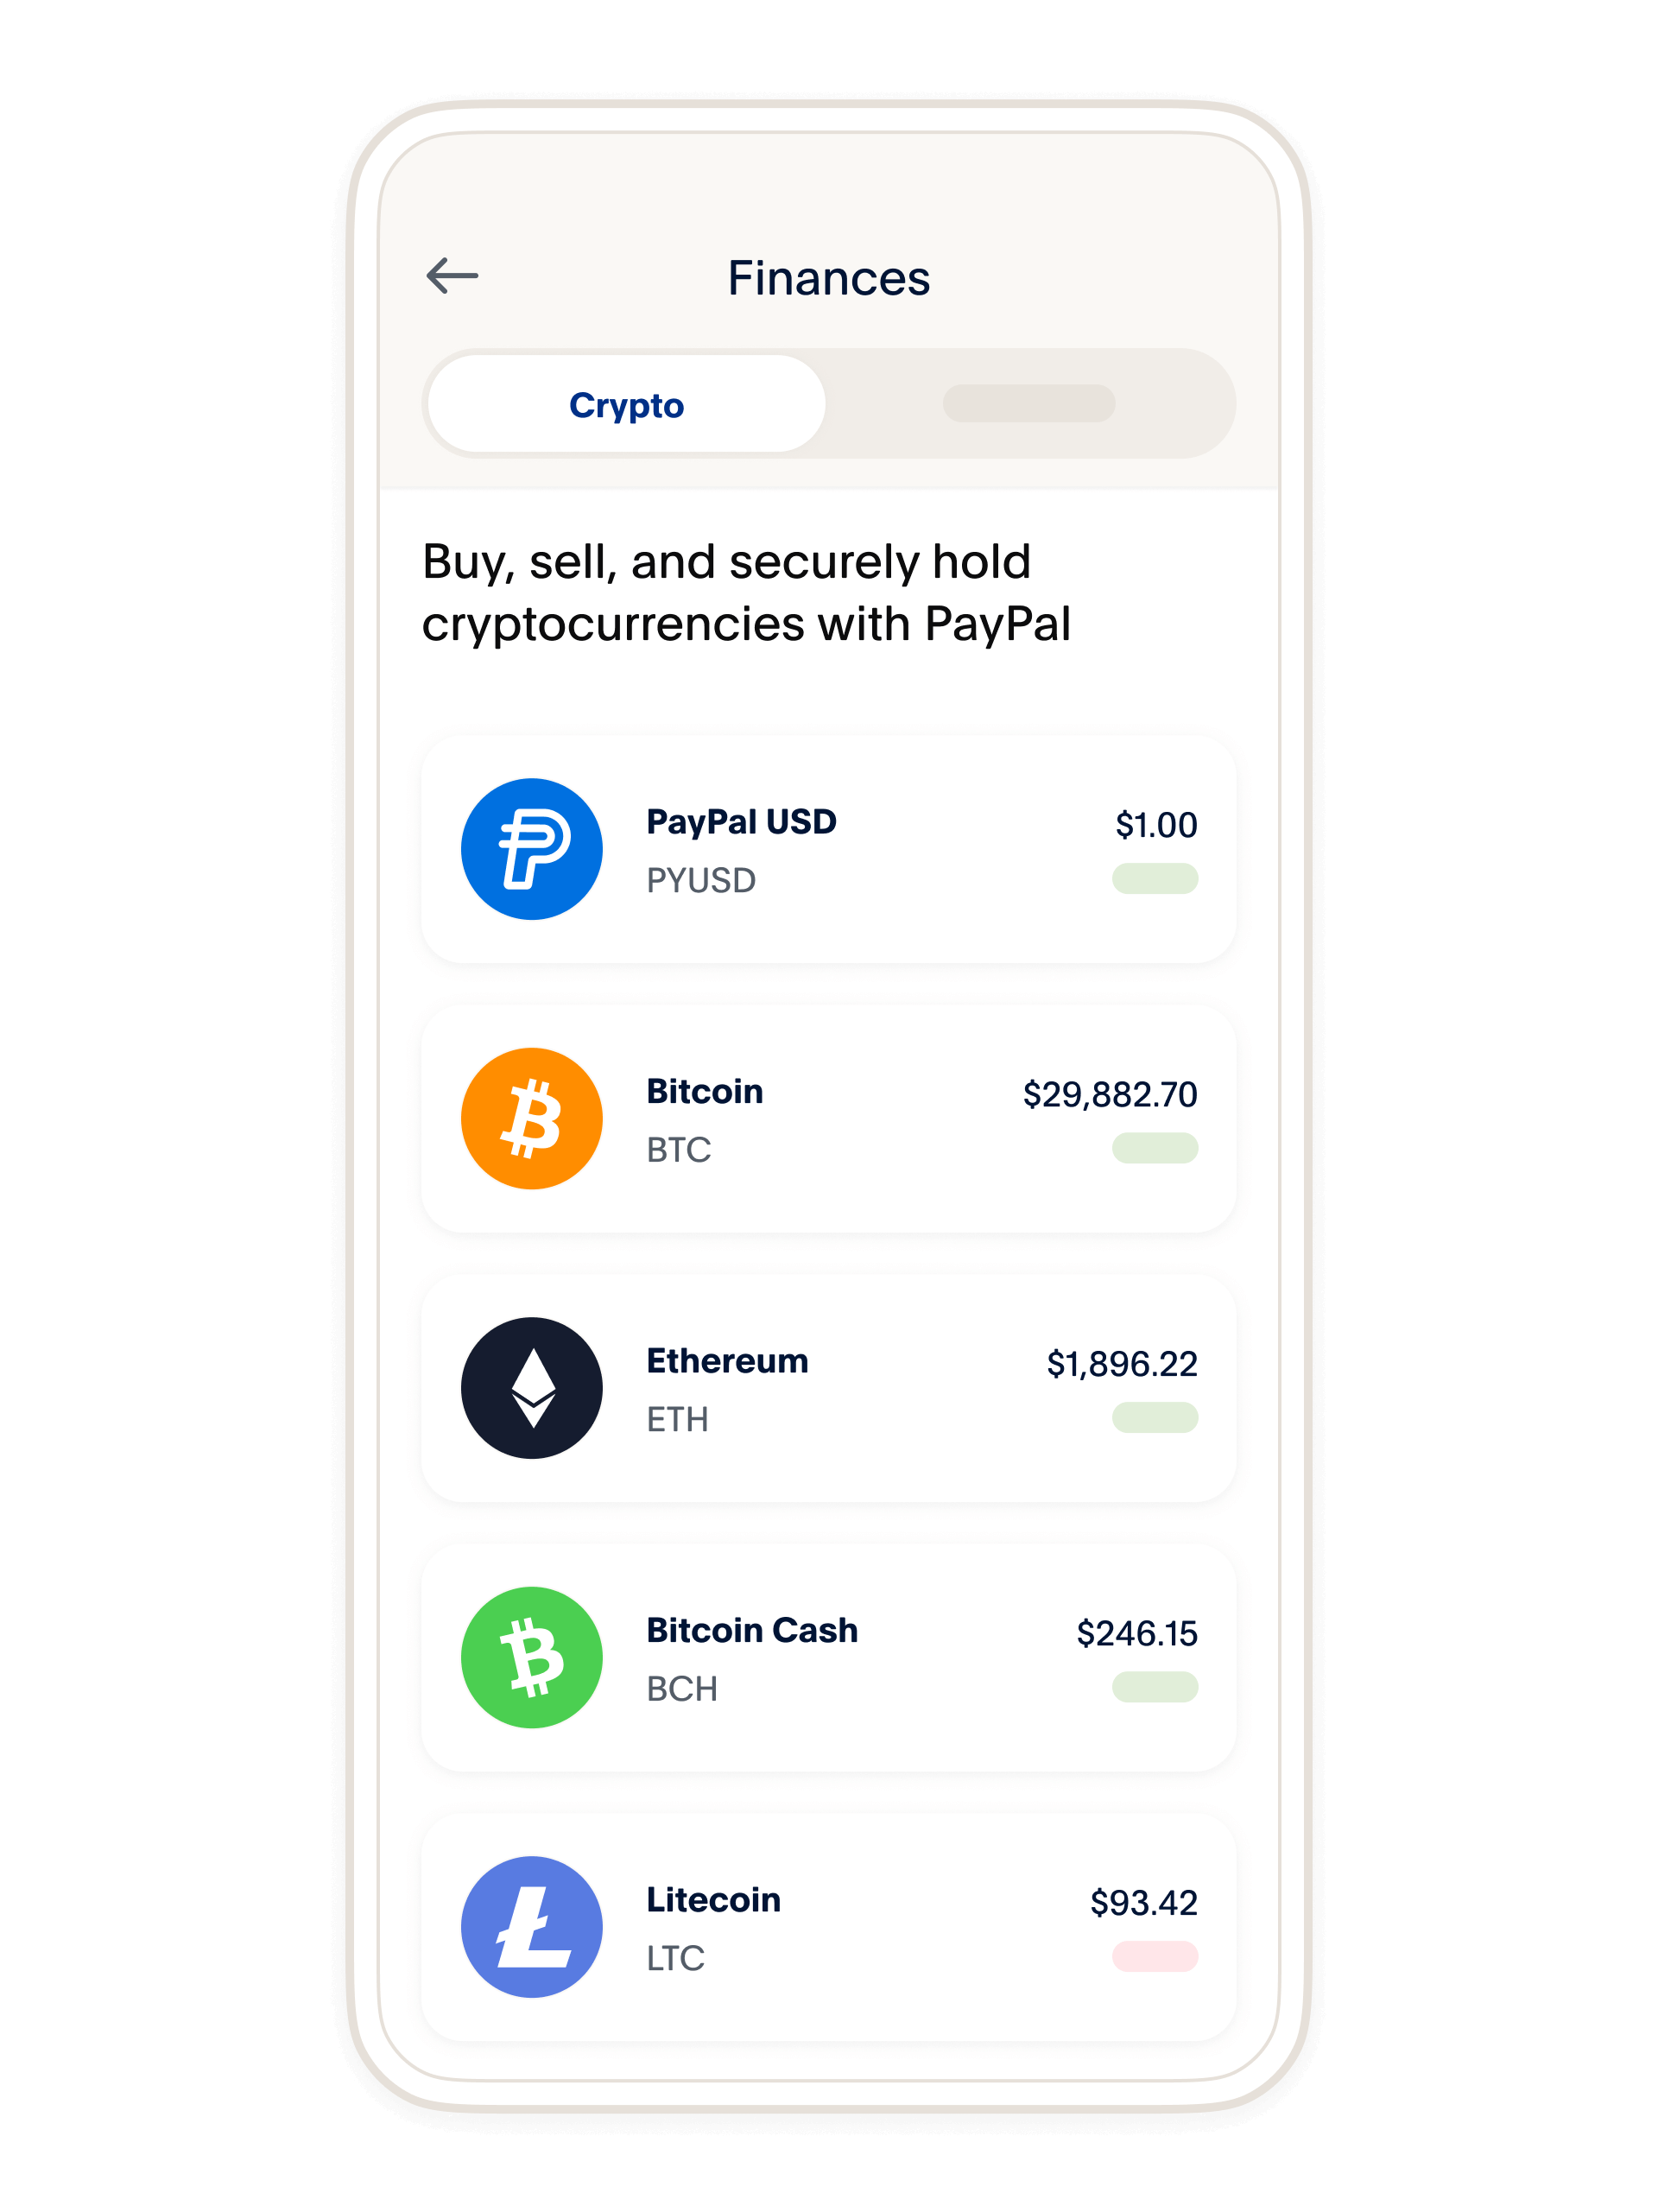 Exchange Bitcoin (BTC) to PayPal USD  where is the best exchange rate?